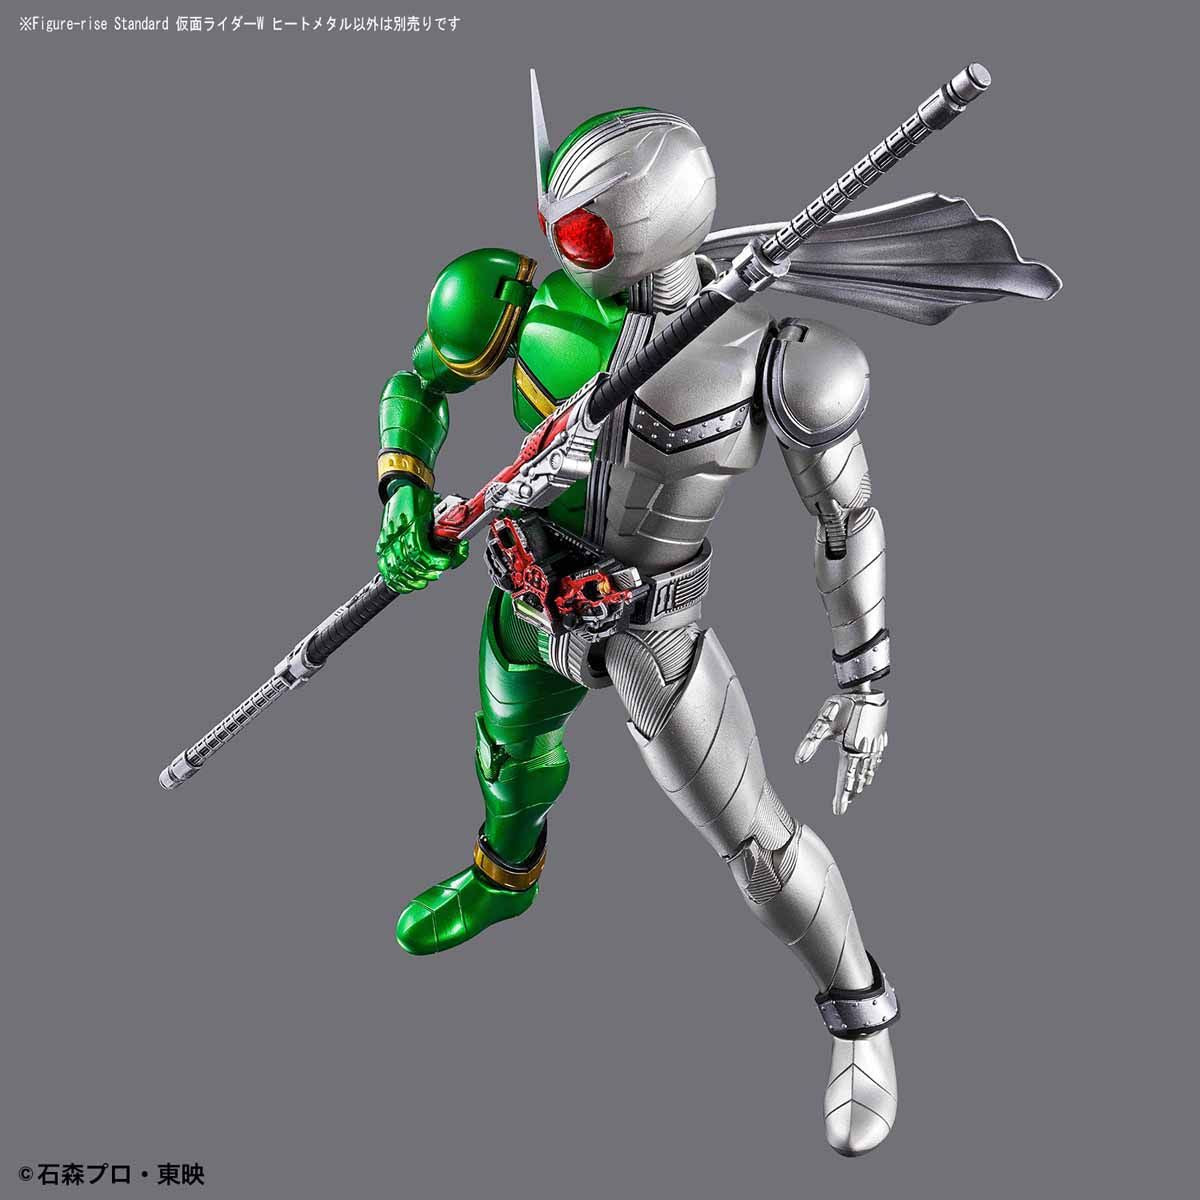 Kamen Rider Double Heatmetal Figure-rise Standard - Kamen Rider Bandai | Glacier Hobbies